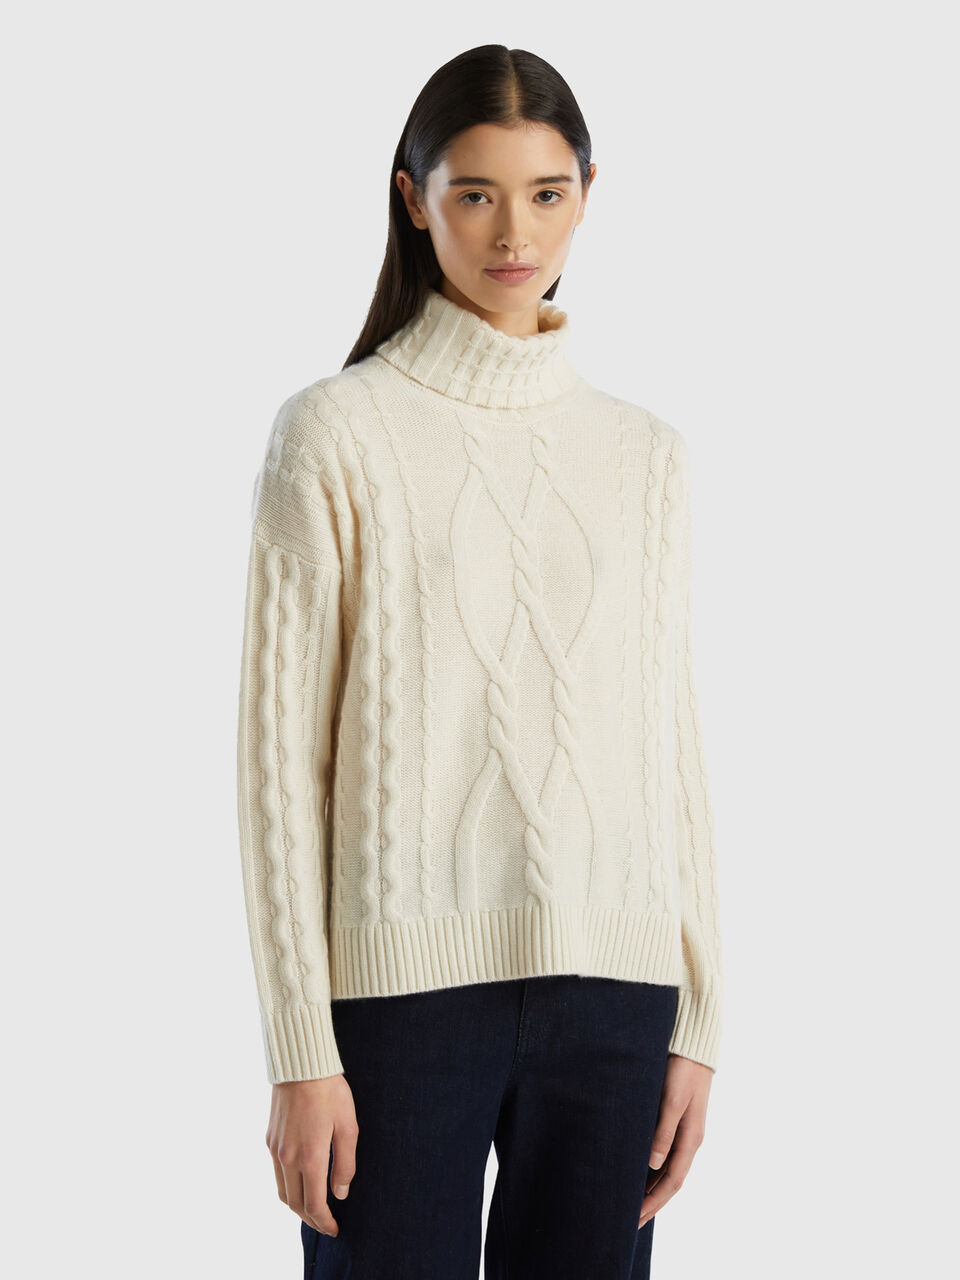 Cream turtleneck sweater in pure Merino wool - Creamy White